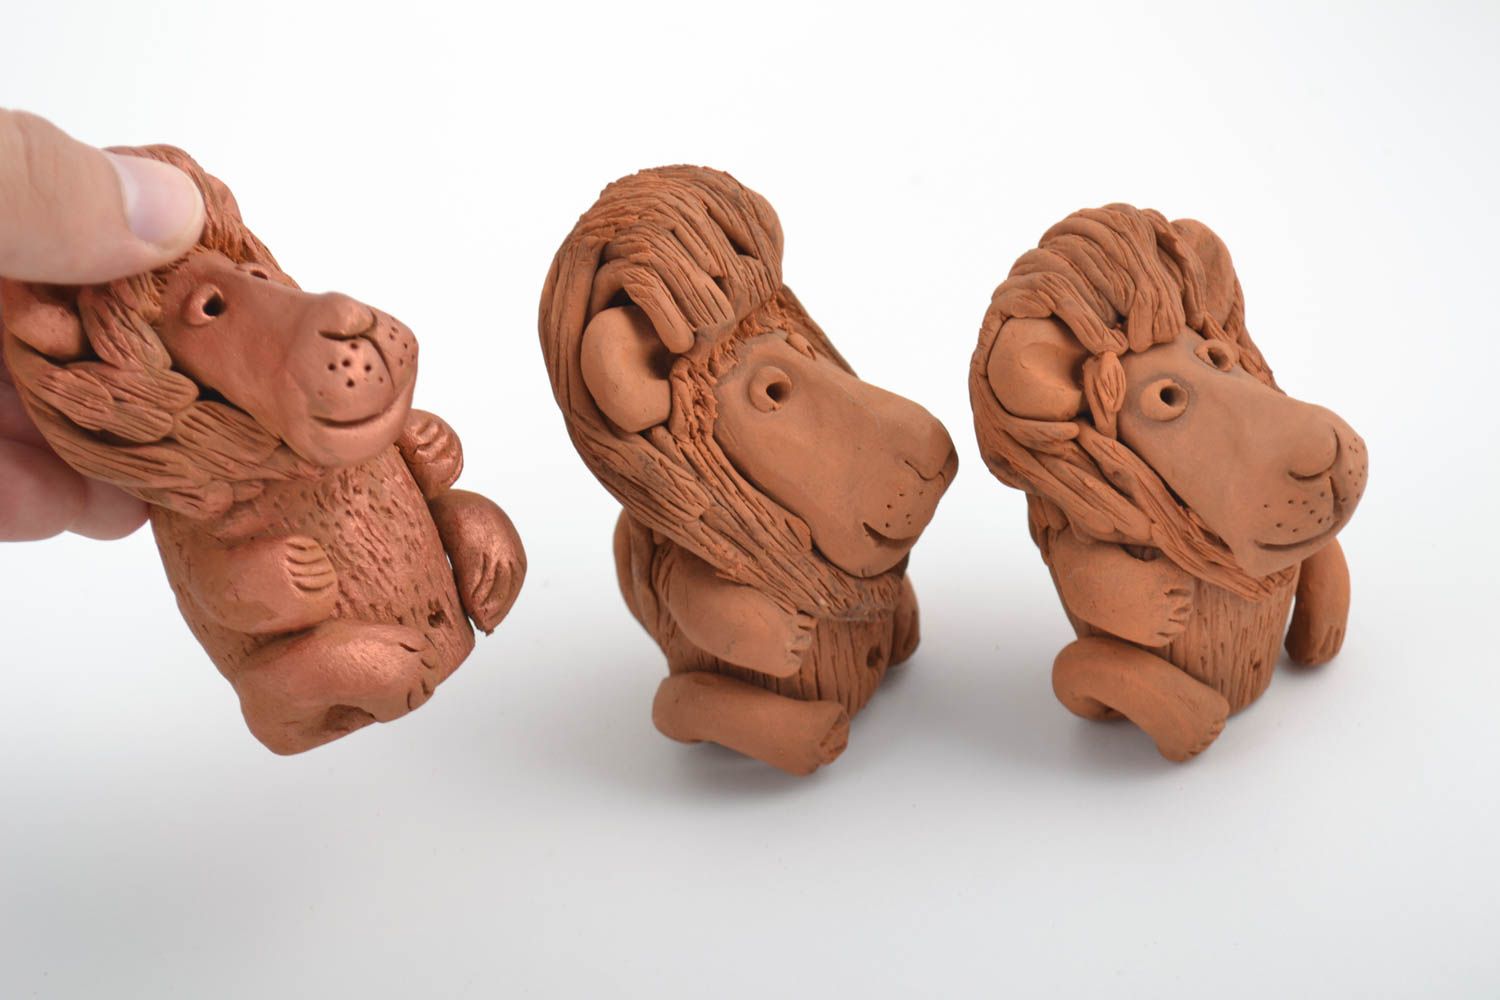 Handmade statuette designer figurine set of 3 items decor ideas unusual souvenir photo 5